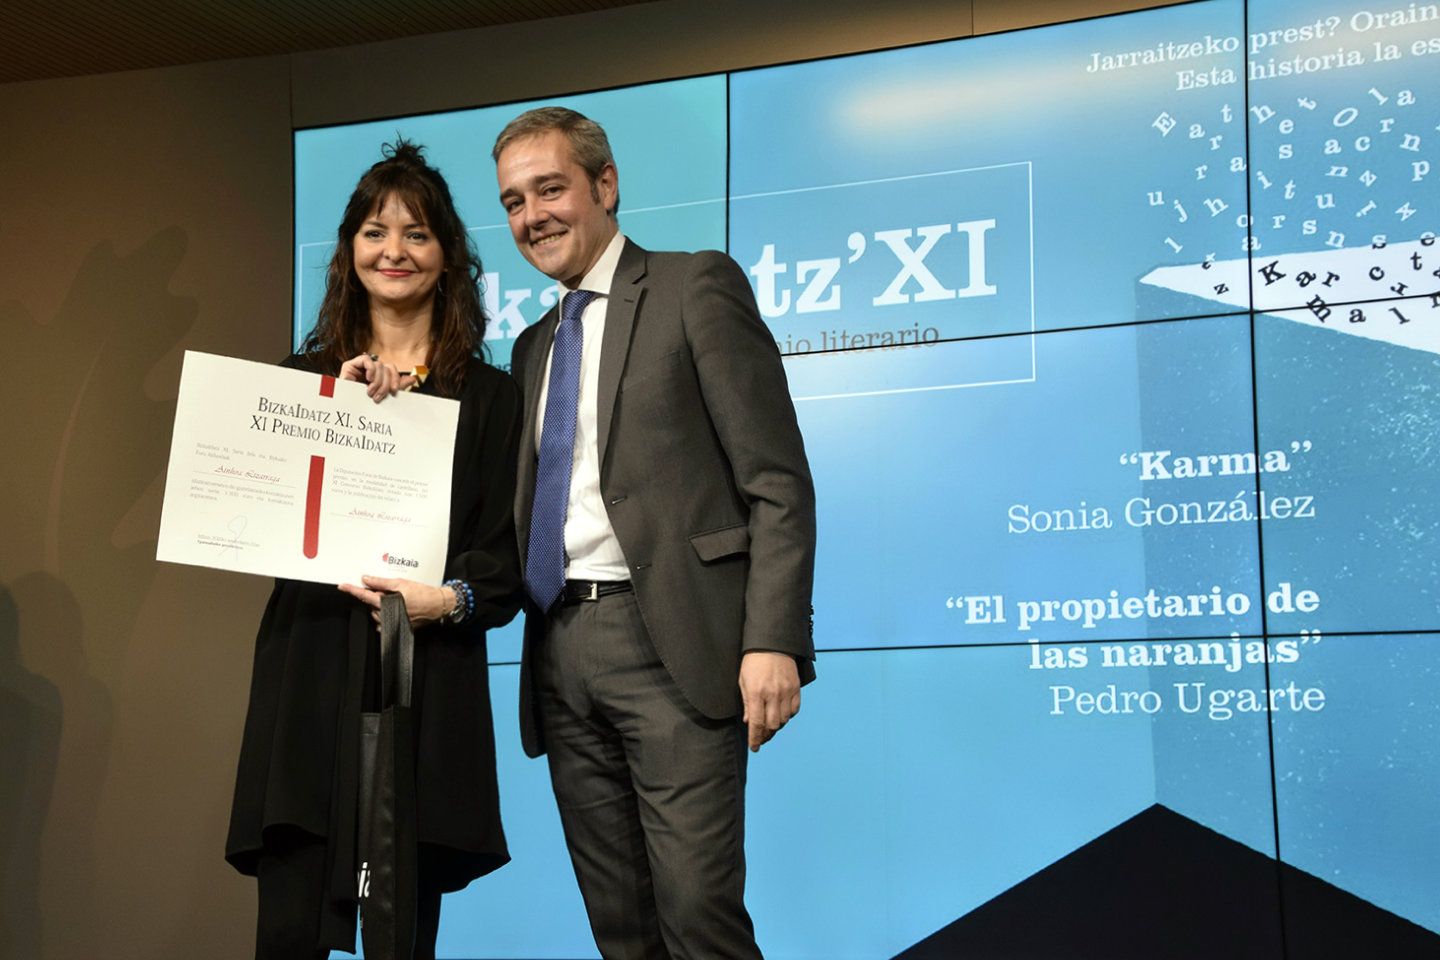 Ainhoa Lizarraga |Primer Premio Certamen literario Bizkaidatz Diputación Foral de Bizkaia